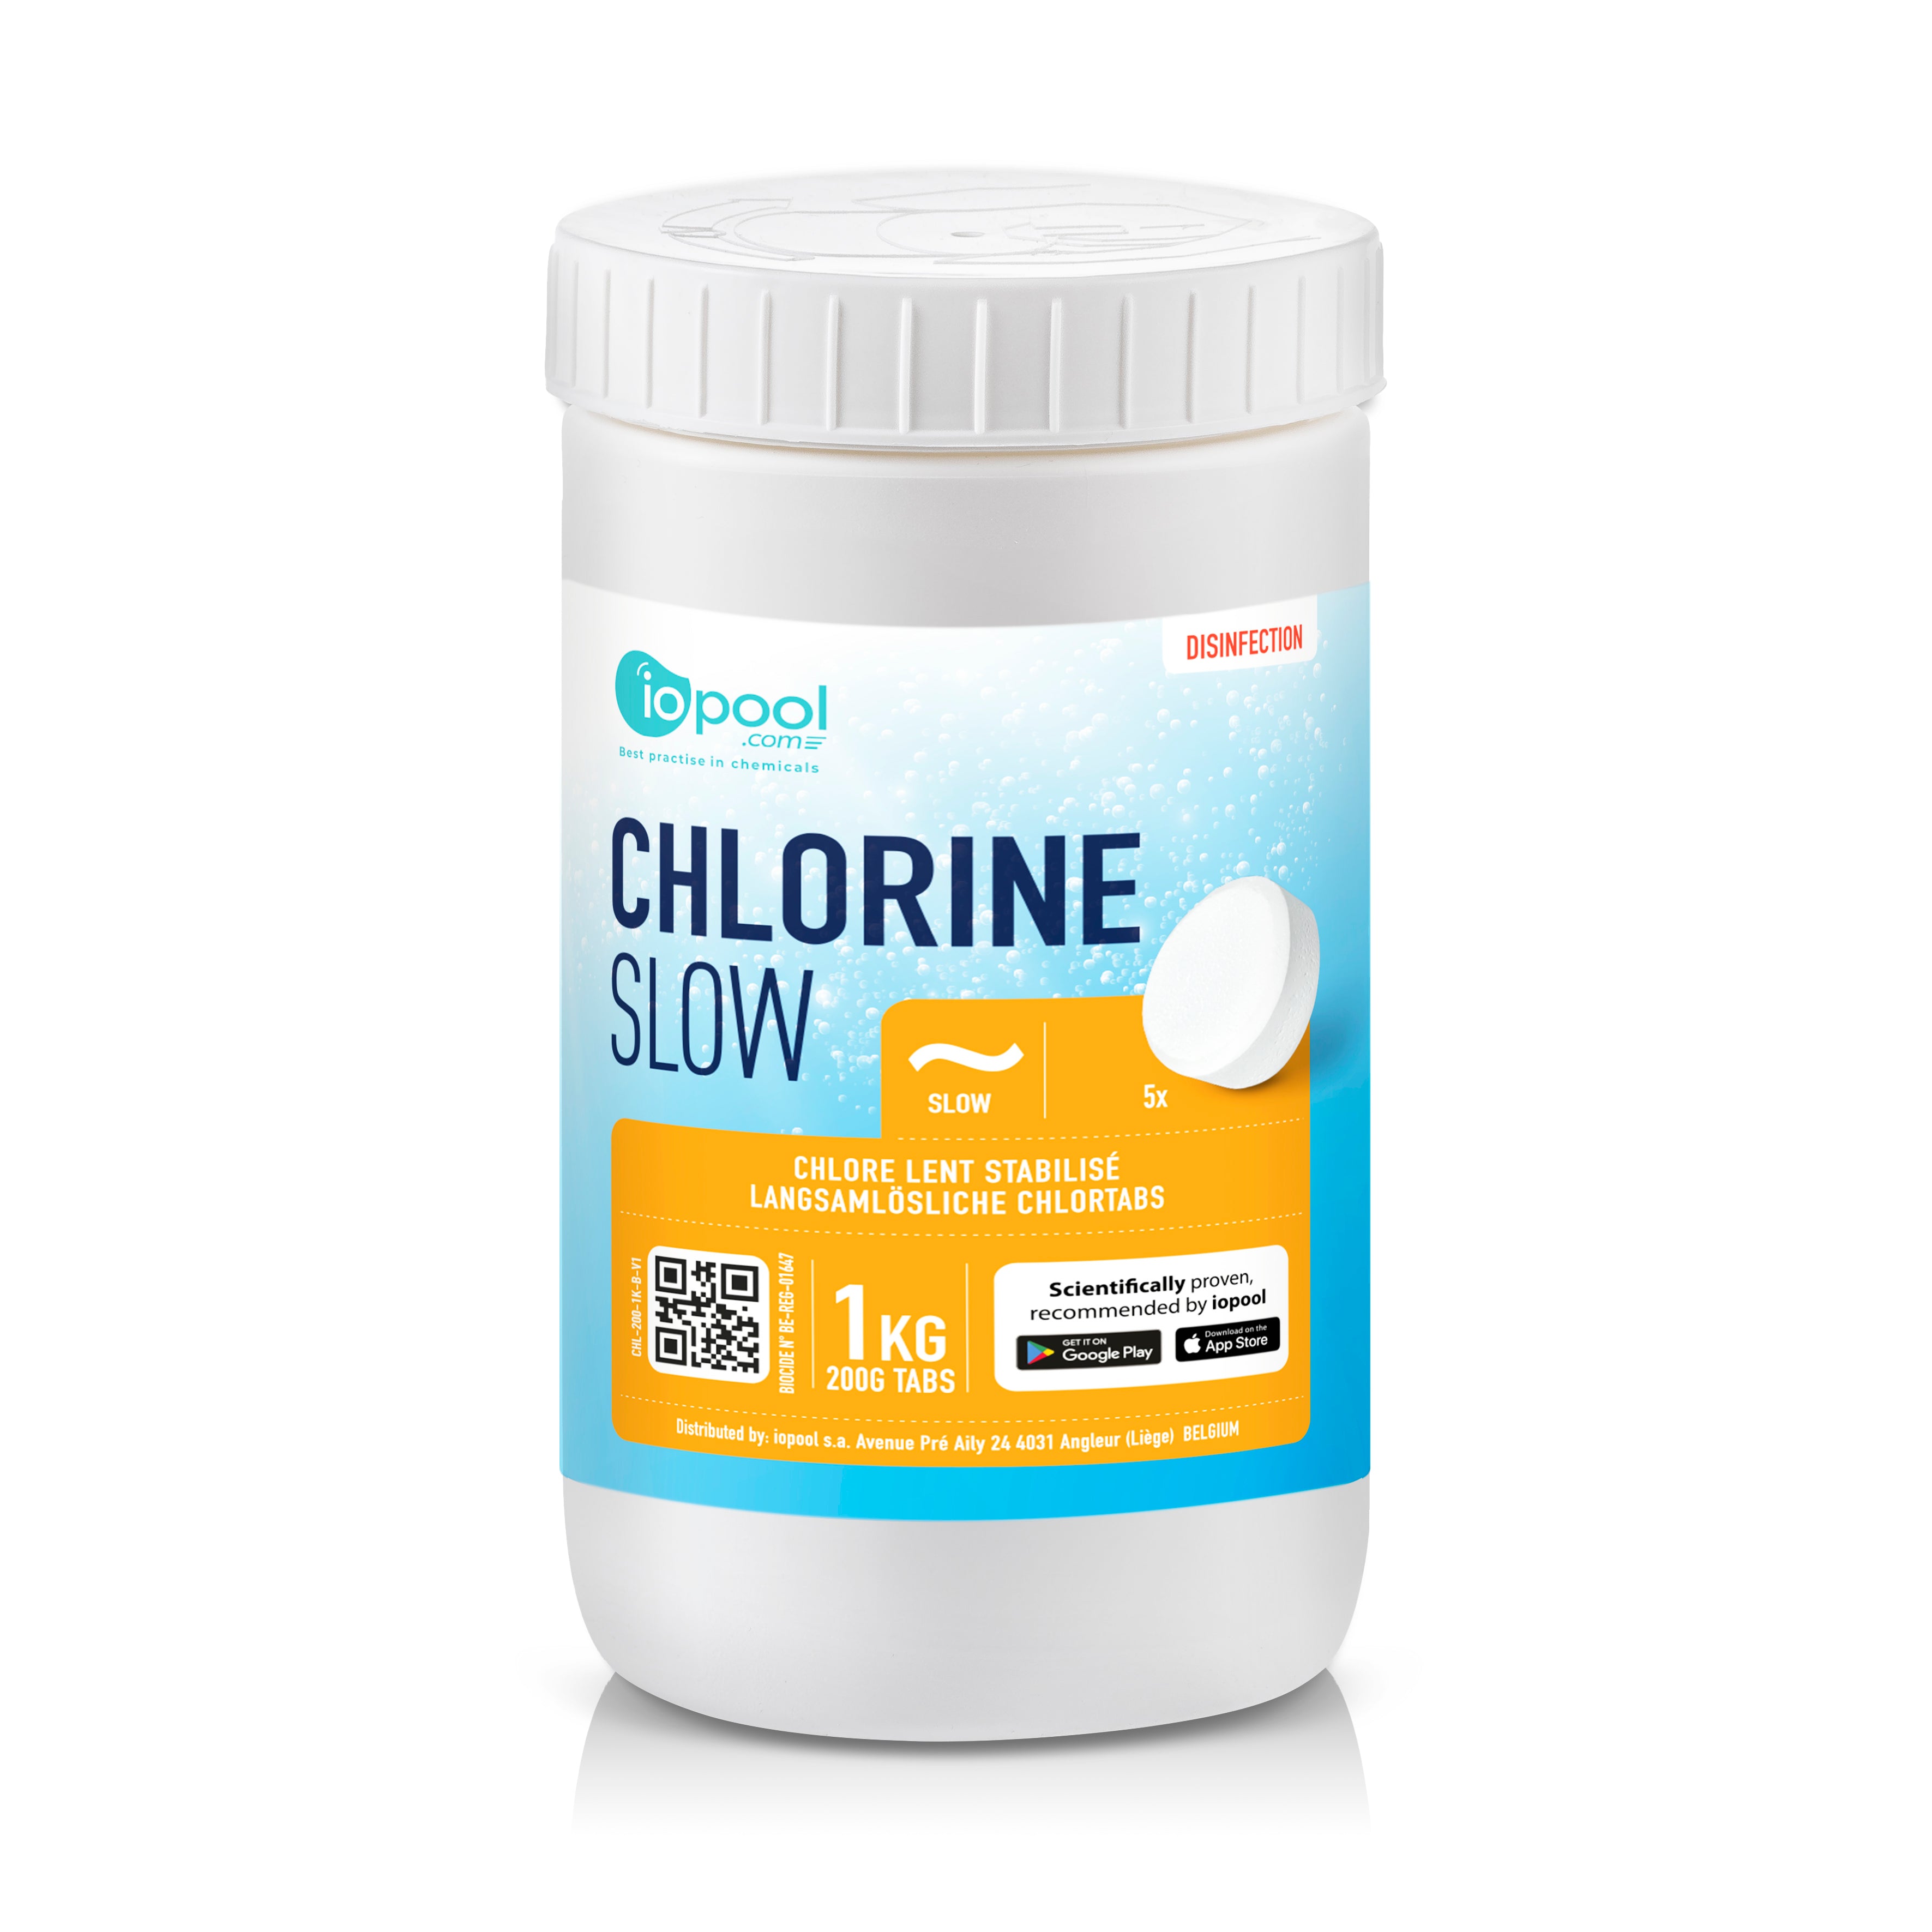 Chlorine Tabs (200g tablet) - 1kg - iopool - Treatment